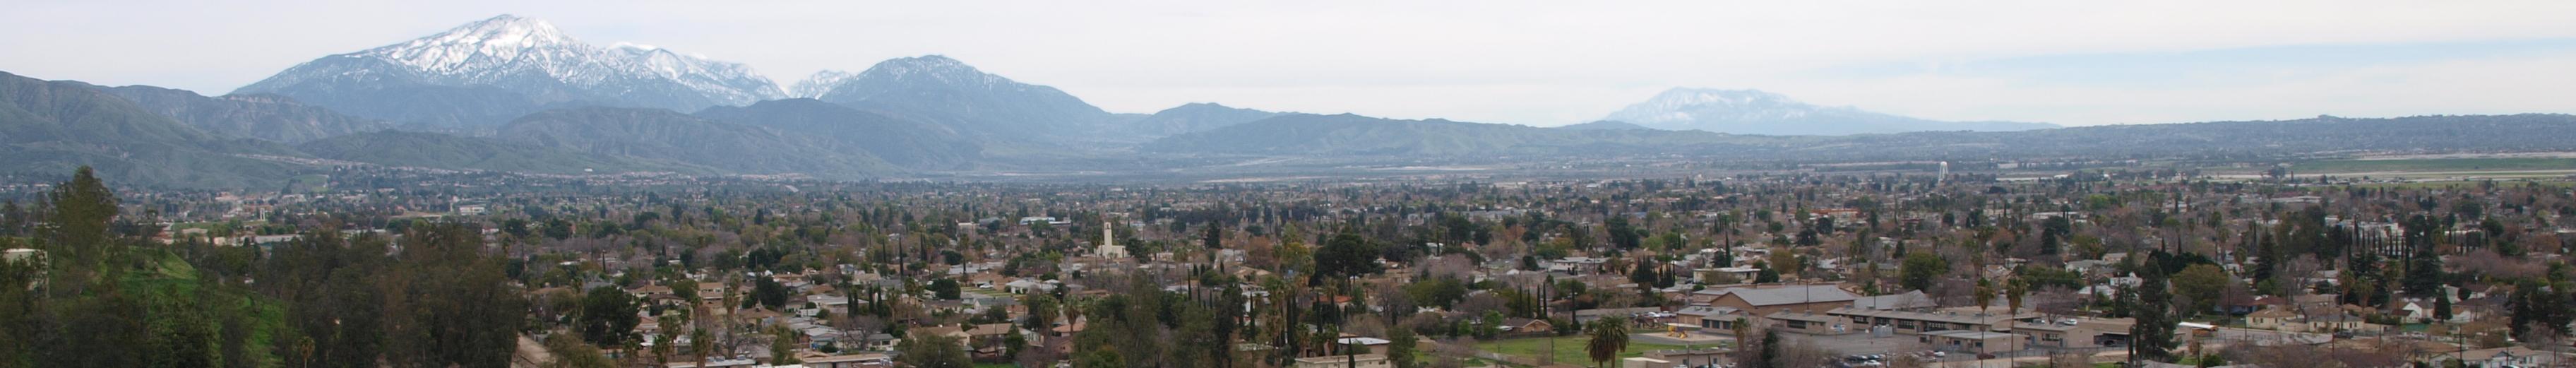 Banner image for San Bernardino on GigsGuide